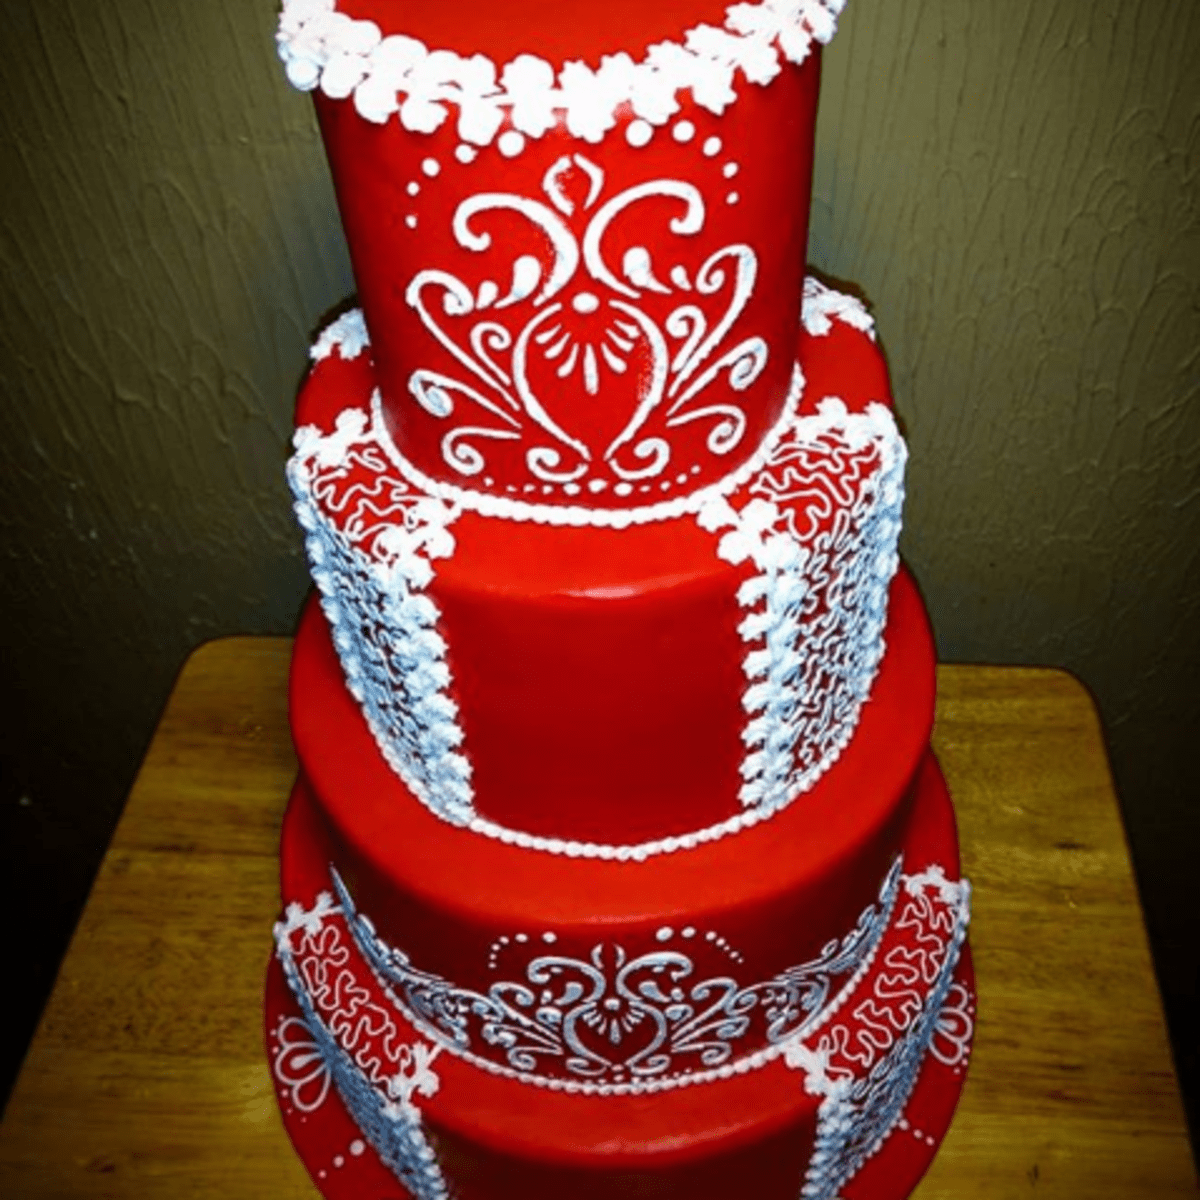 Cake Decorating Tips for Pro-Level Cakes